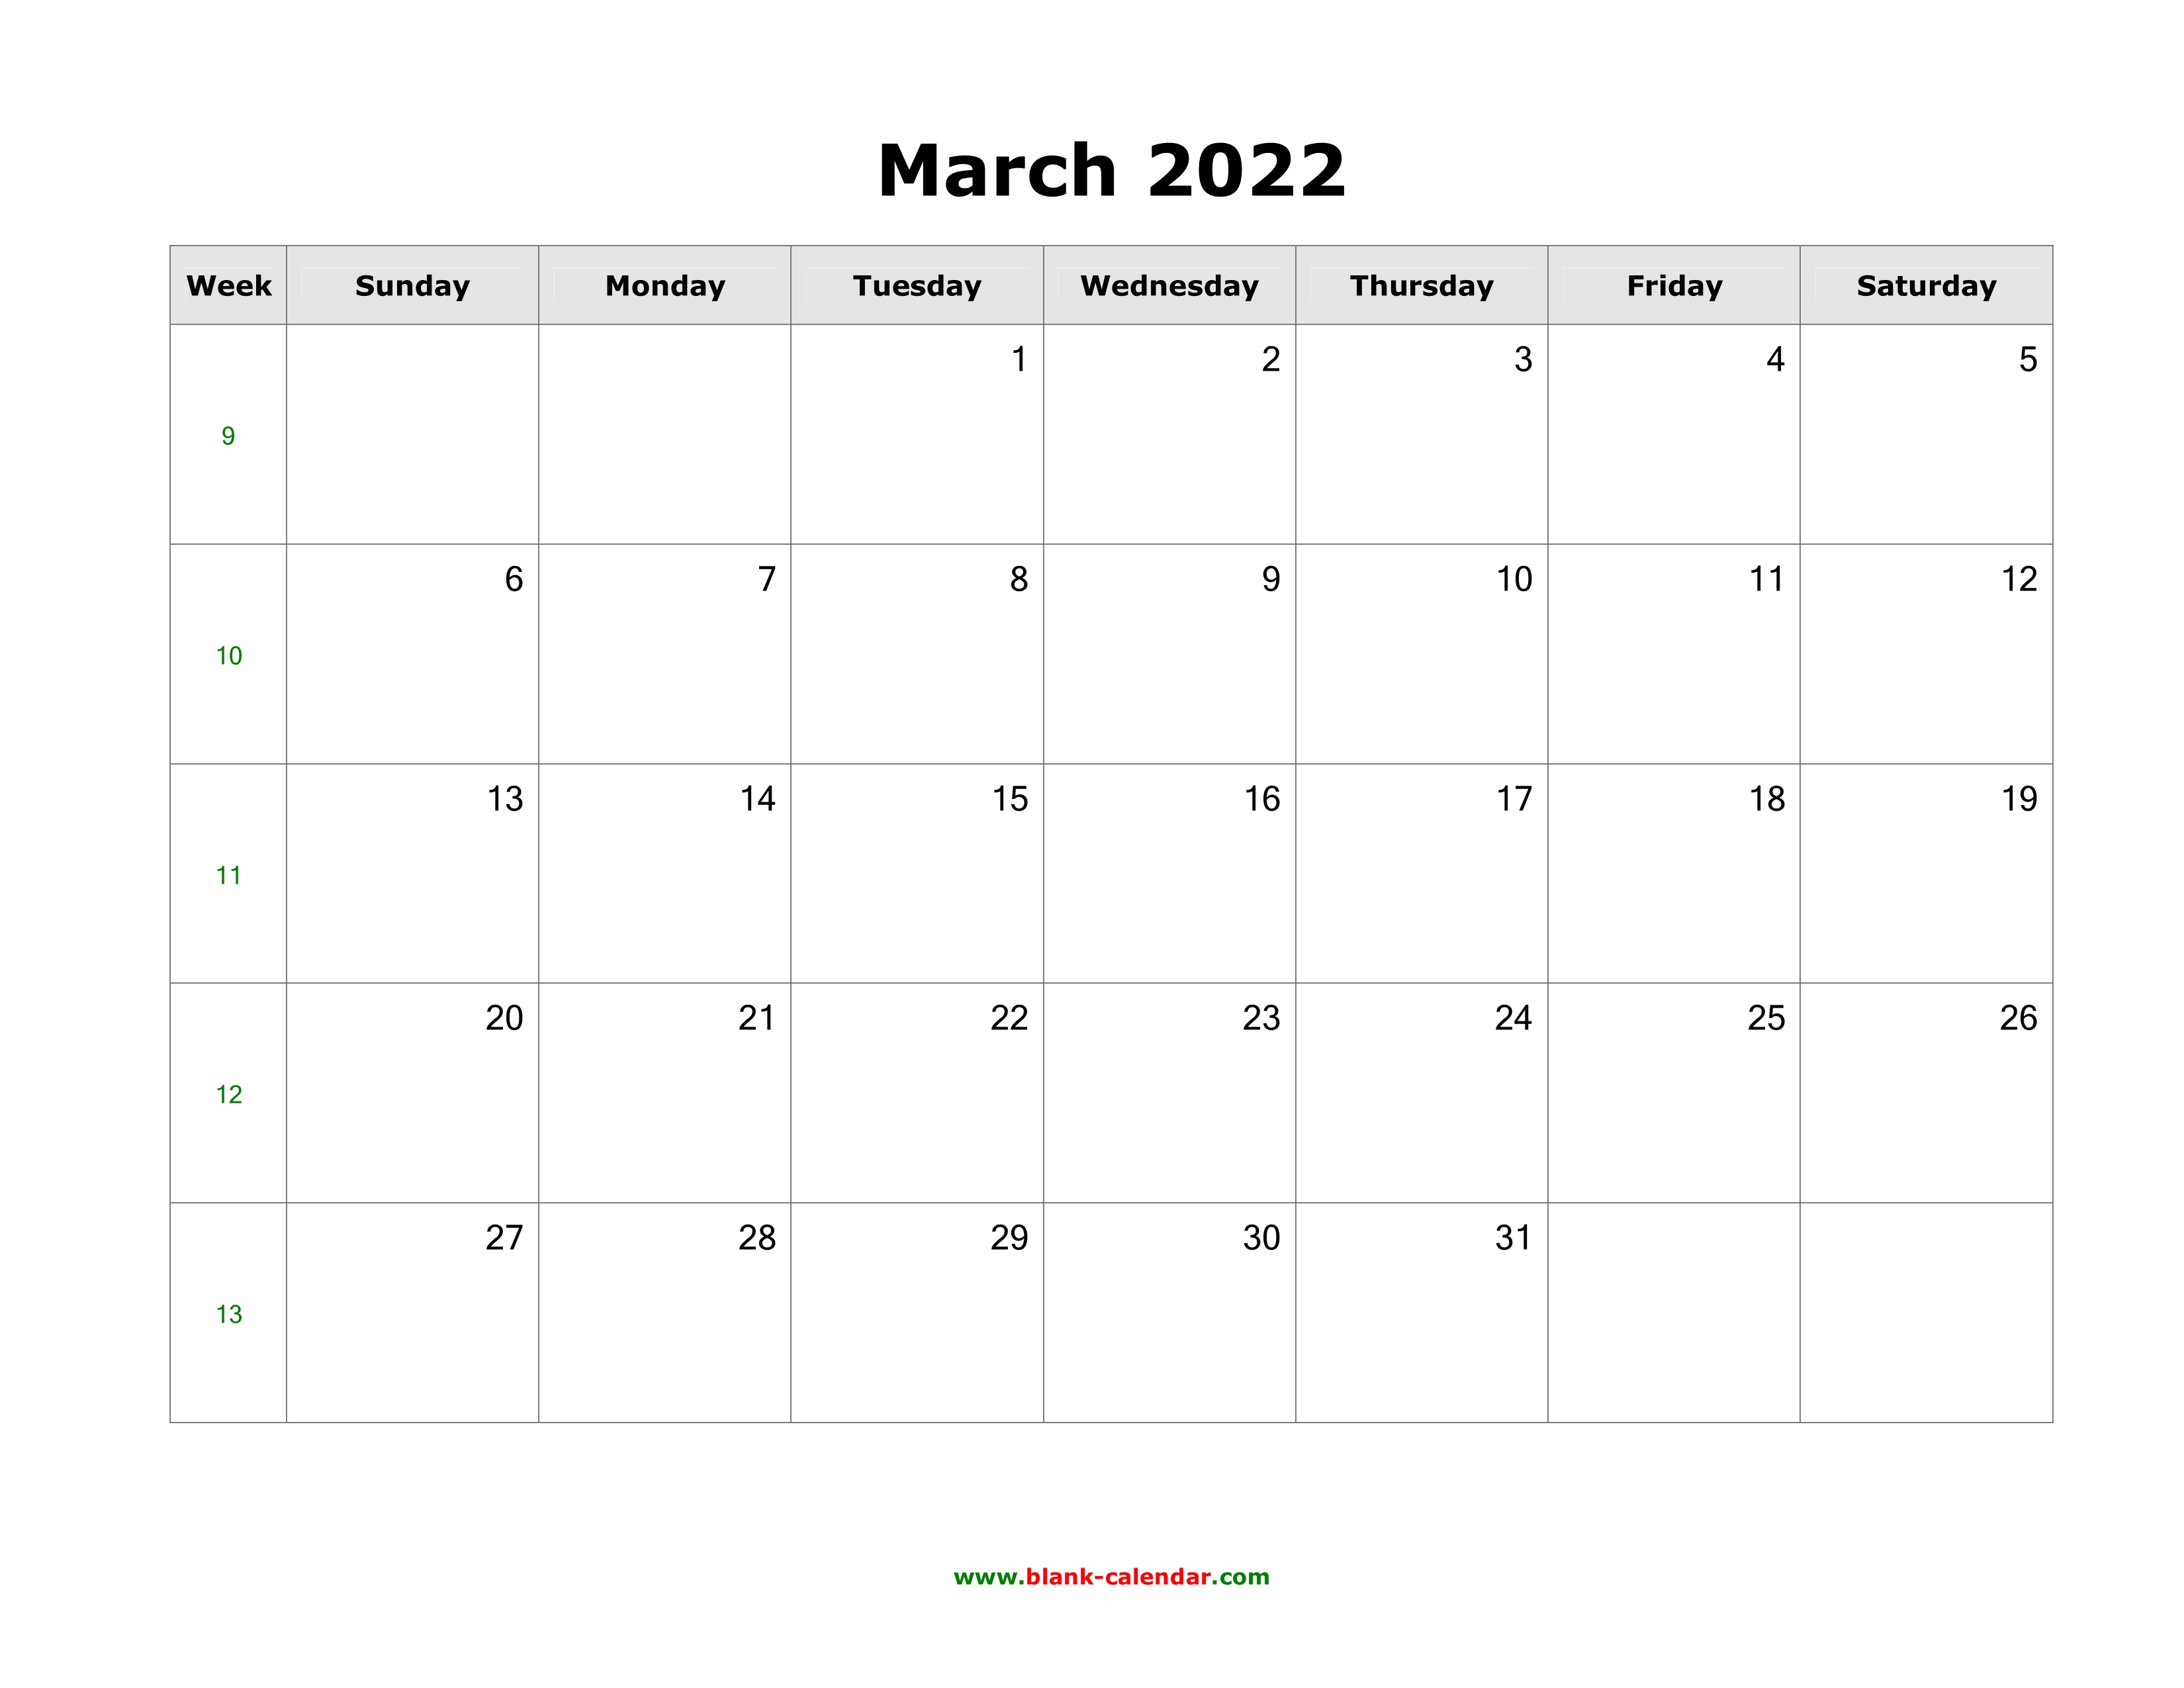 March 2022 Calendar Blank Download March 2022 Blank Calendar (Horizontal)